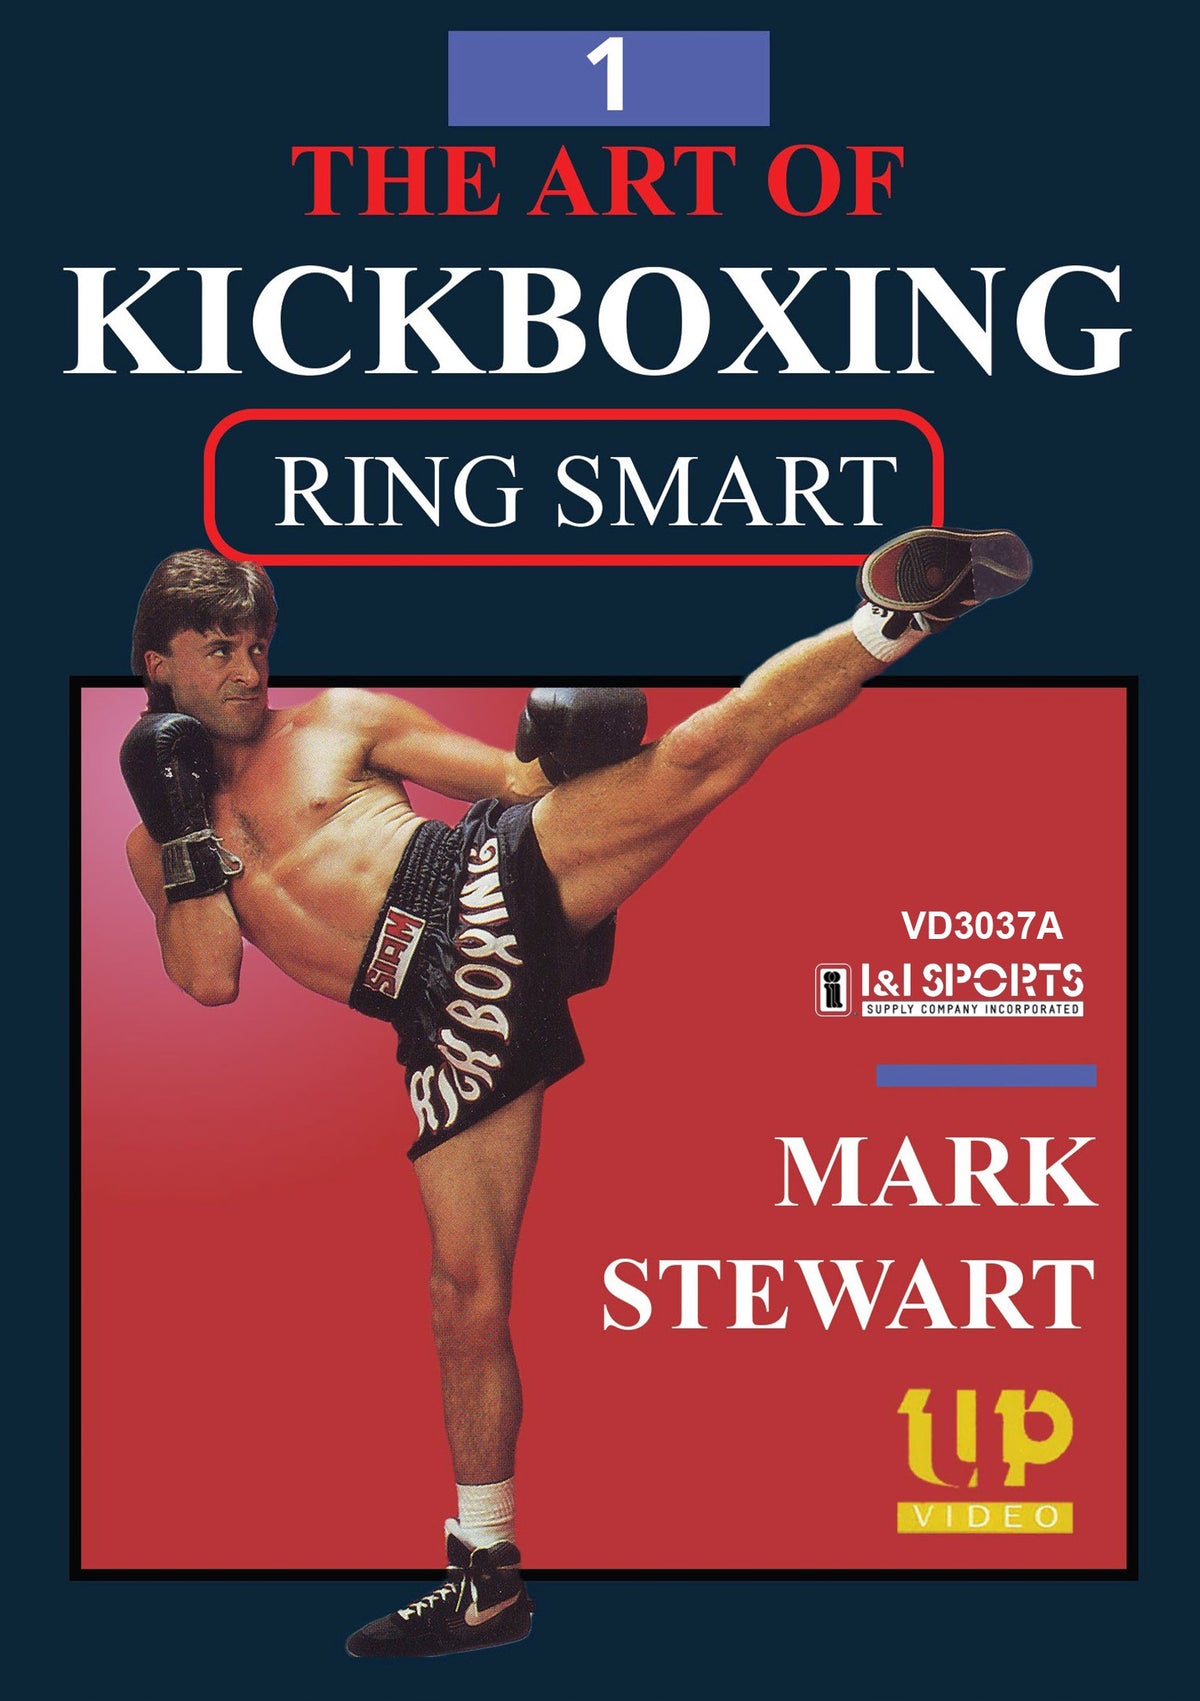 Art of Kickboxing Ring Smart #1 DVD Mark Stewart